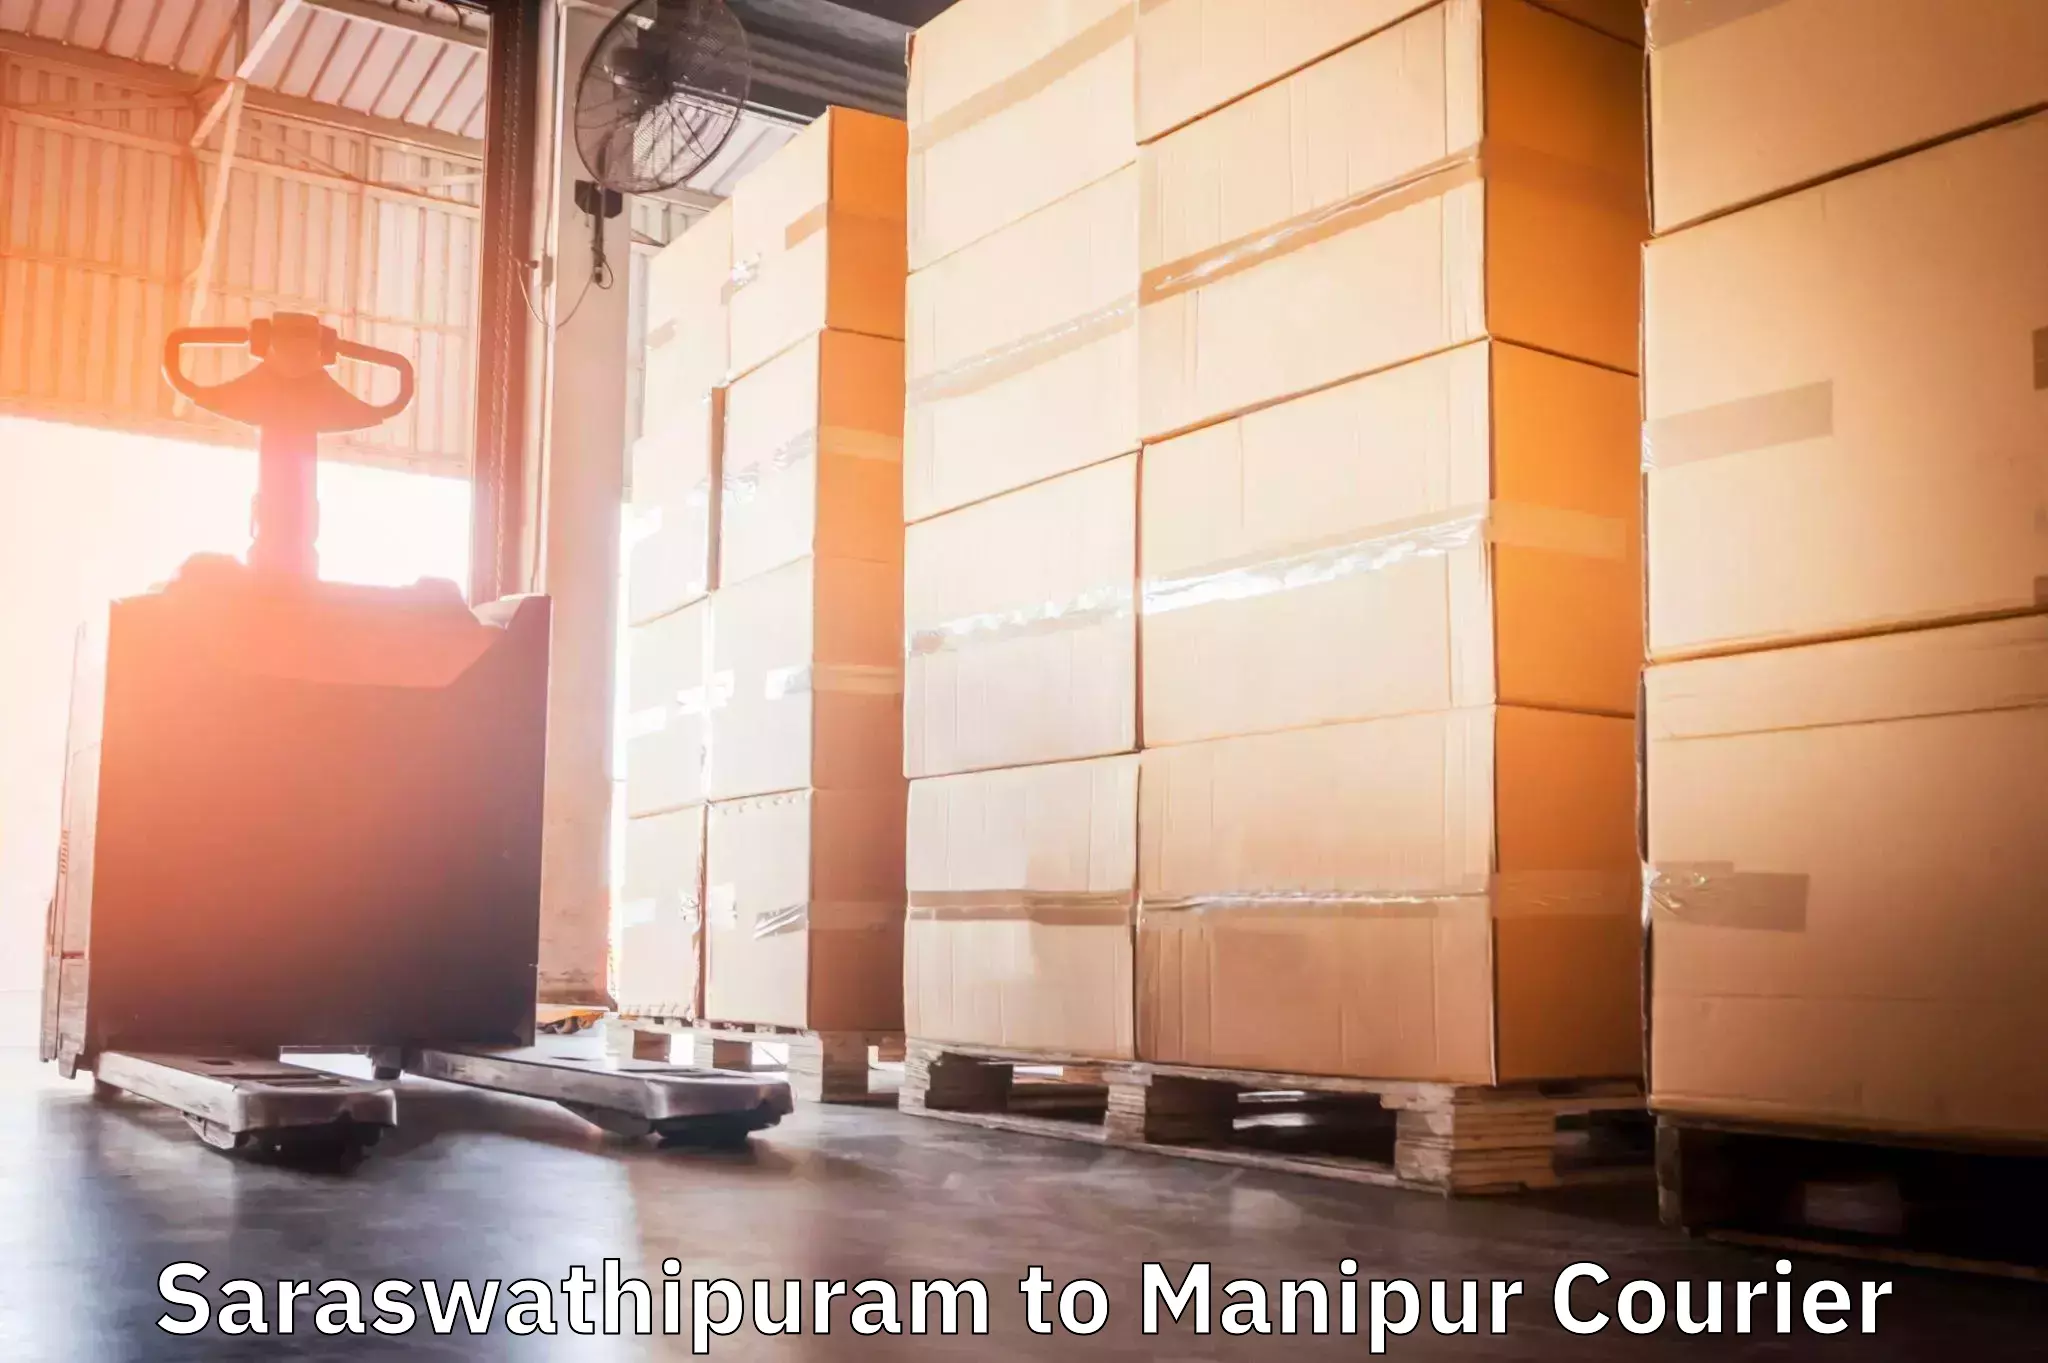 Nationwide delivery network Saraswathipuram to Manipur